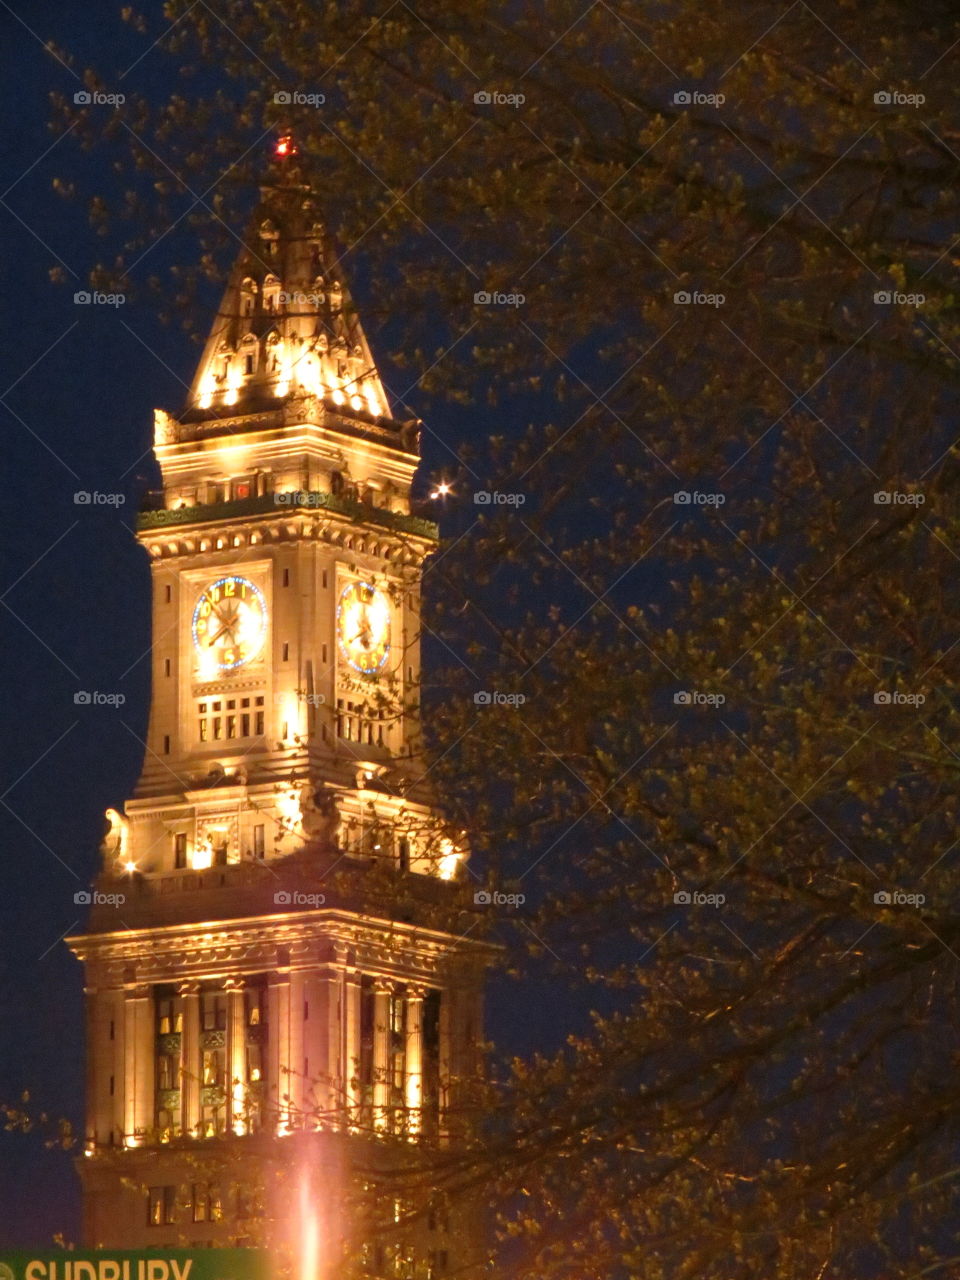 illuminated clock tower in downtown Boston